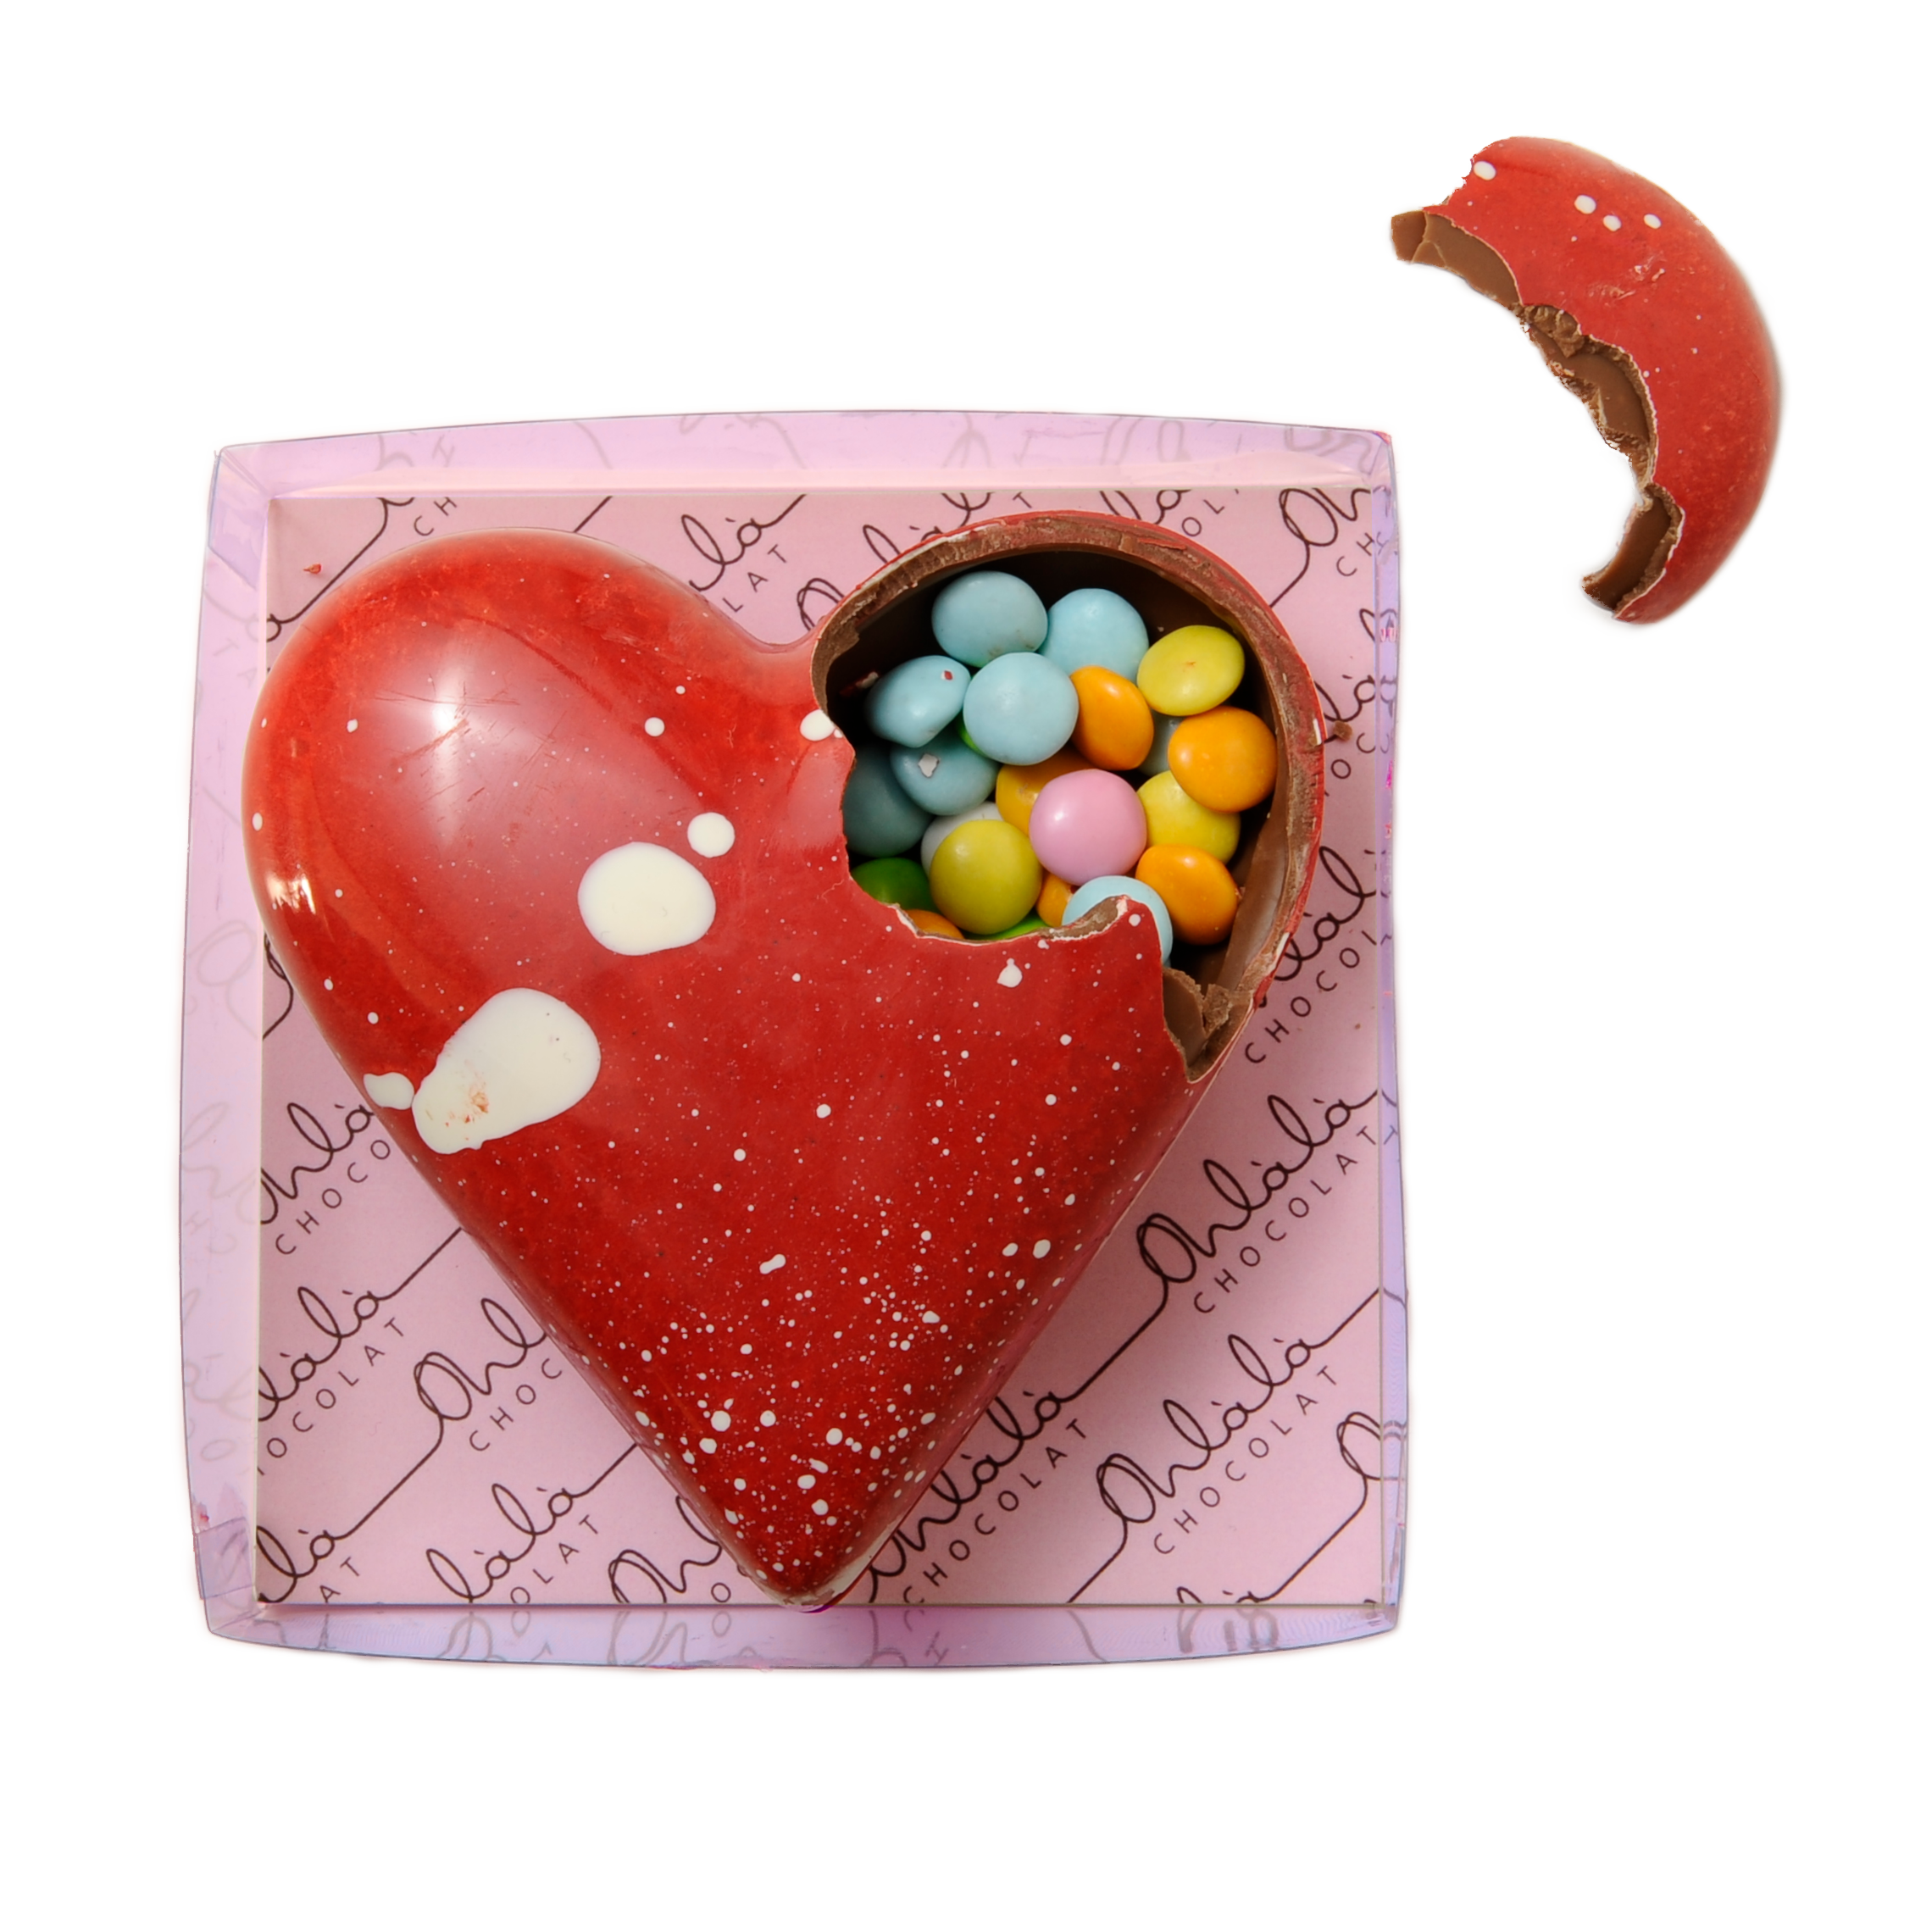 St. Valentines Chocolate Heart